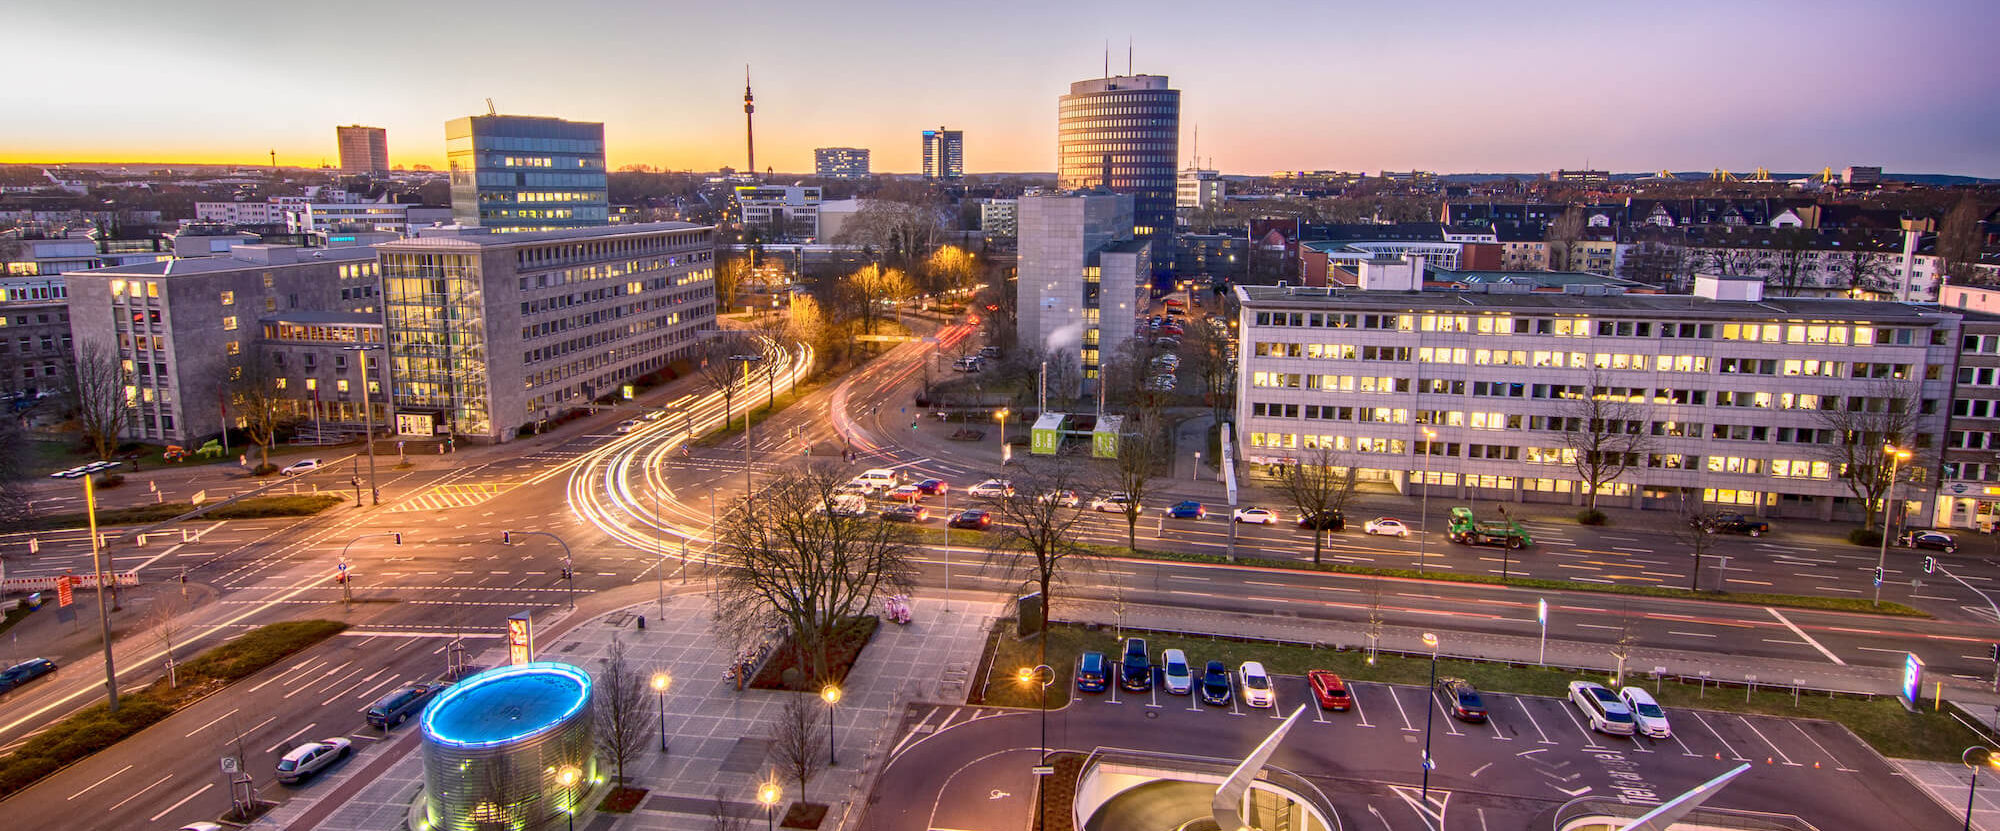 Dortmunder Innenstadt bei Sonnenaufgang